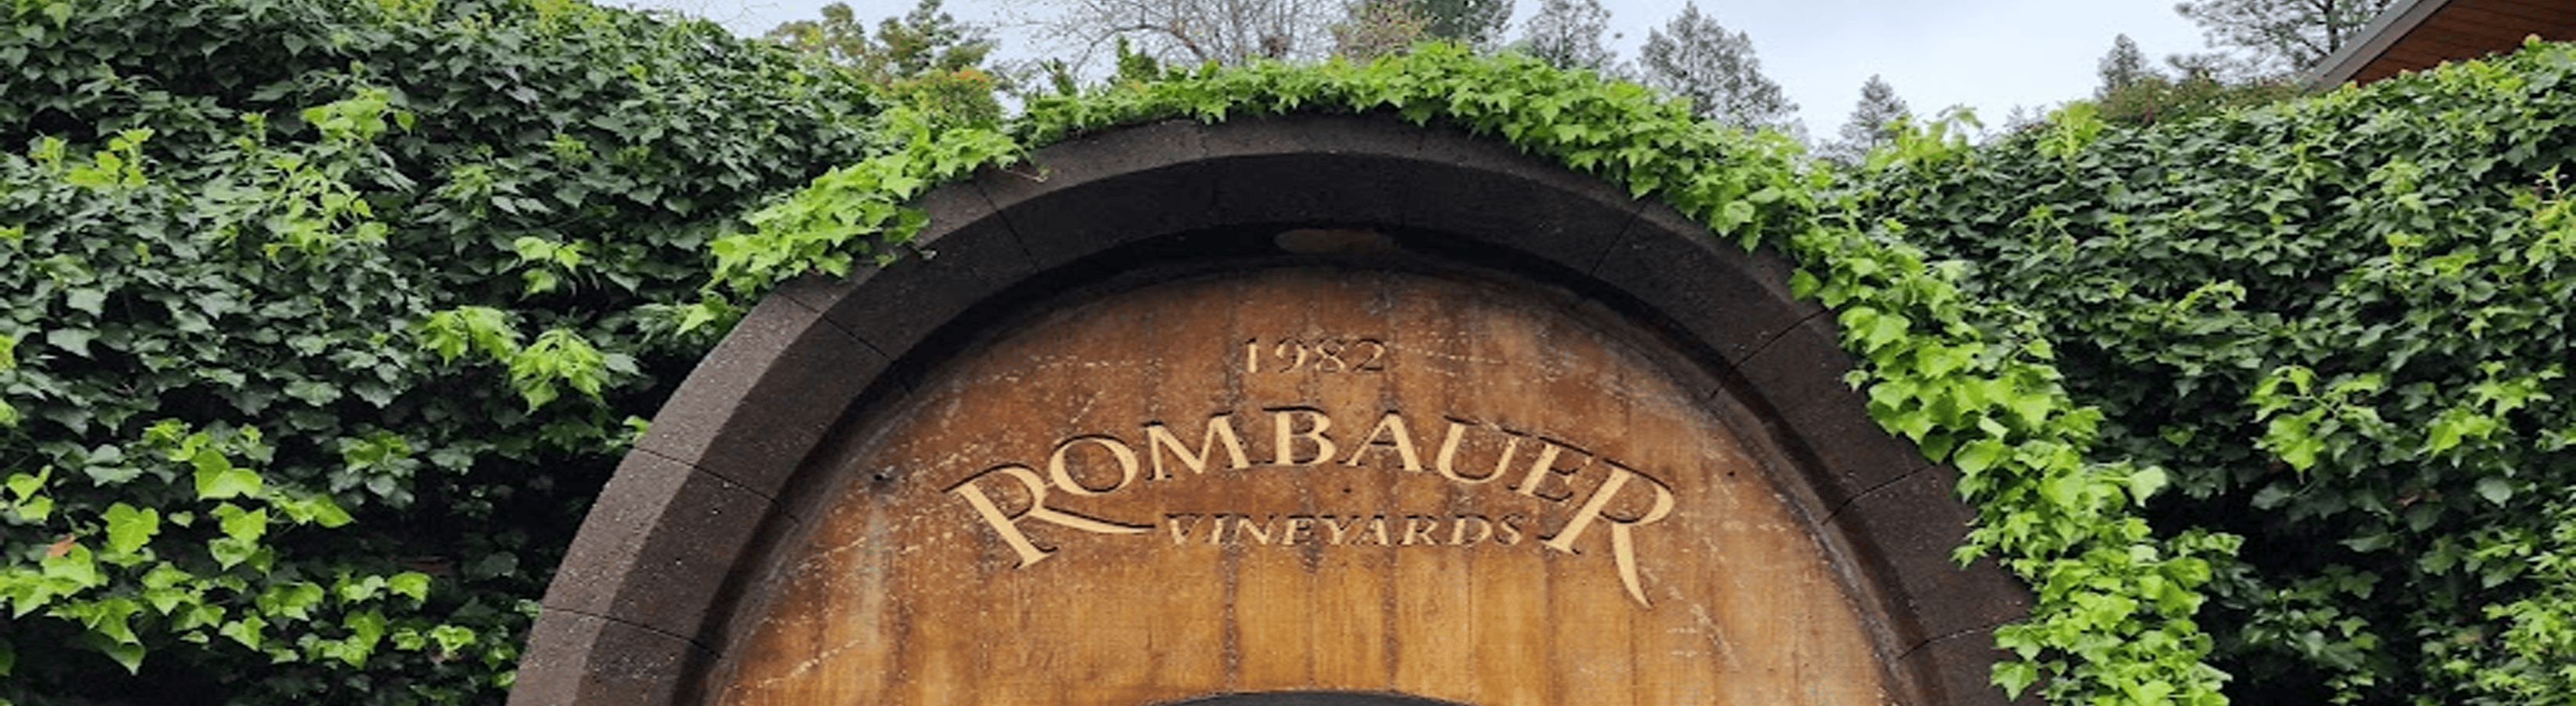 rombauer vineyards